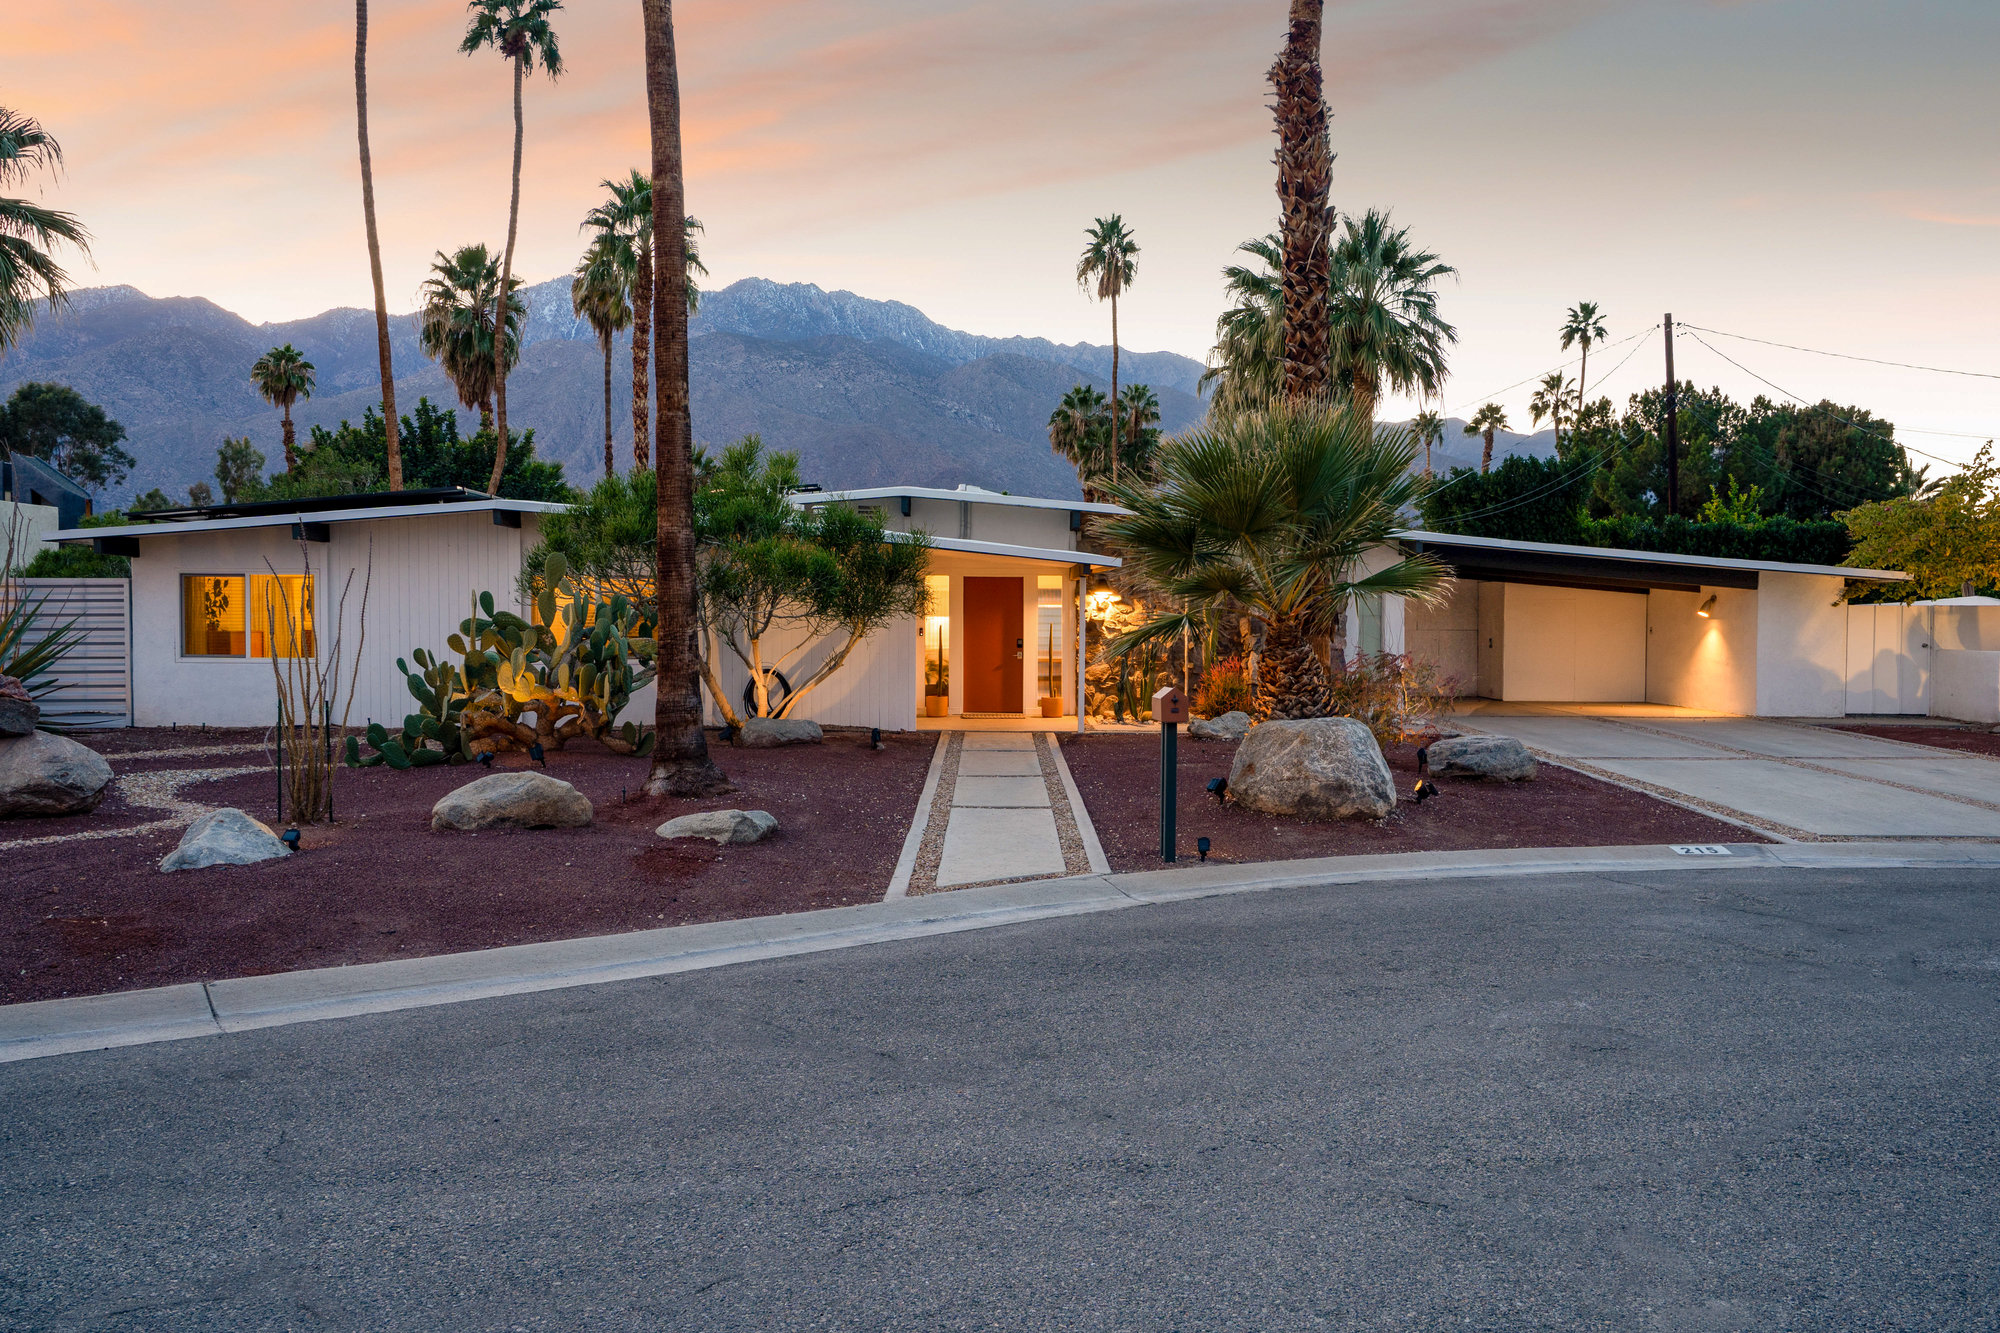 An Alexander home in the Sunmor neighborhood of Palm Springs